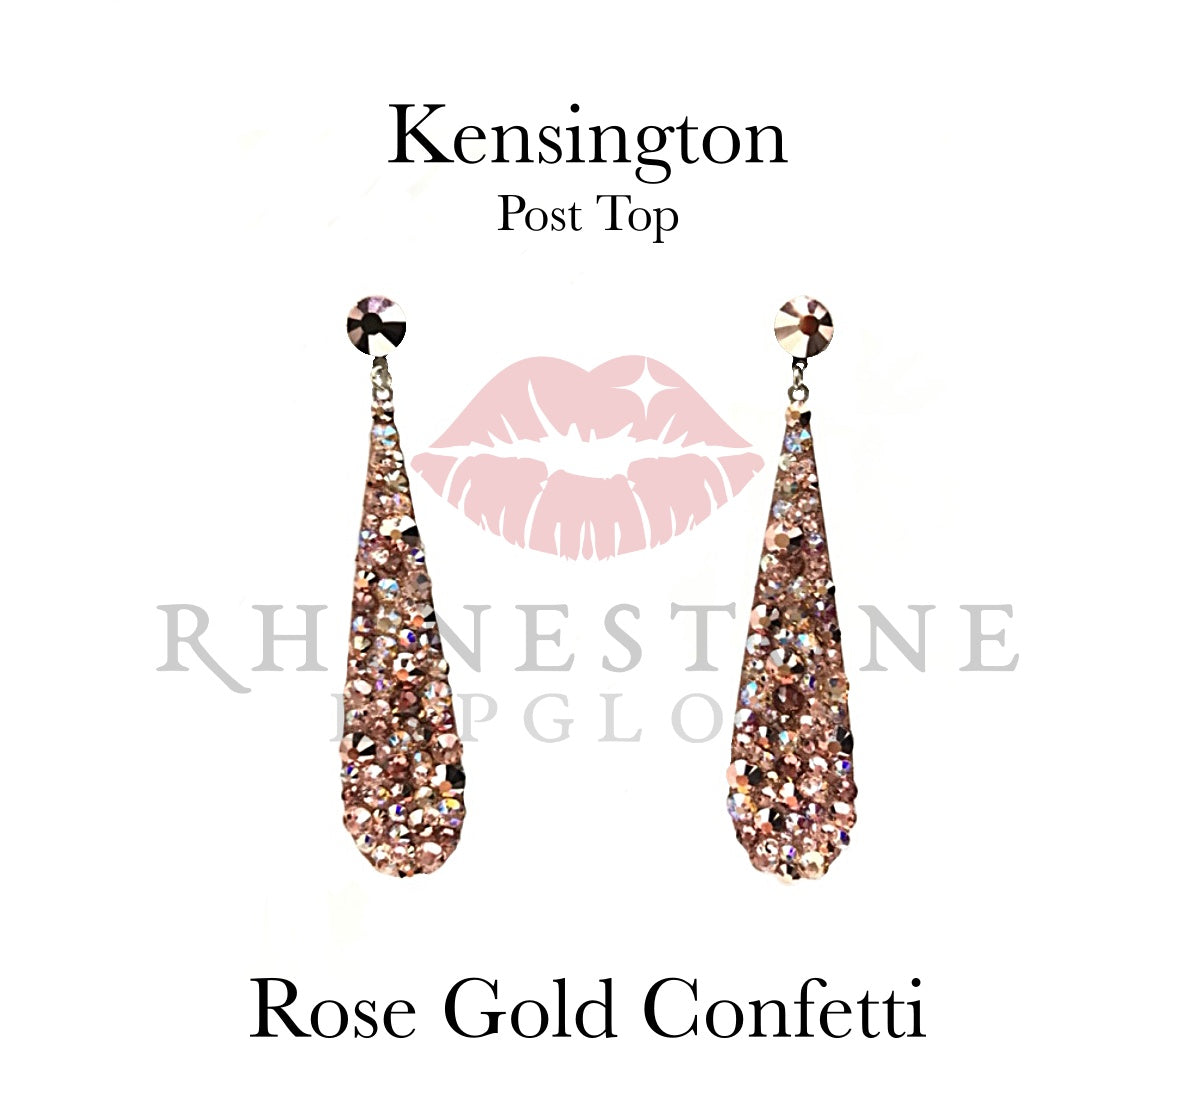 Kensington Post Top Confetti in Rose Gold